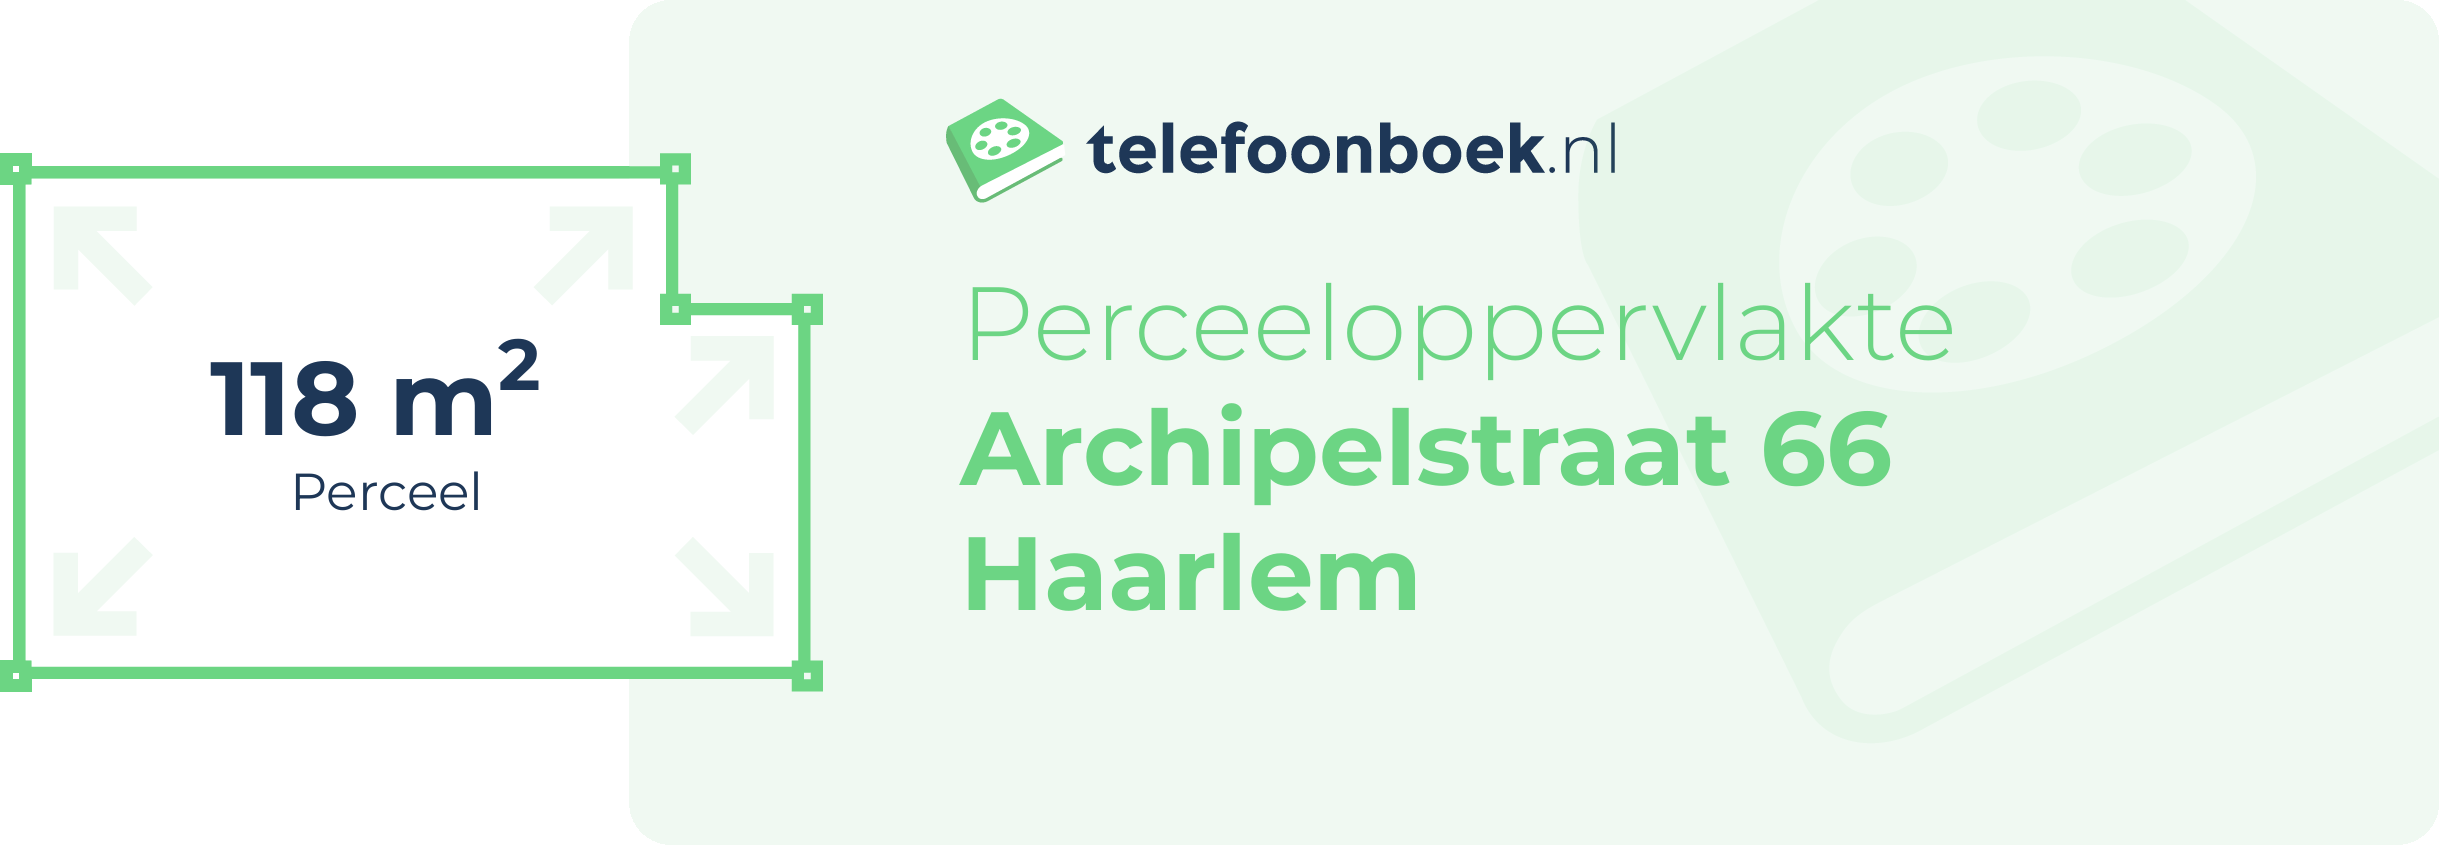 Perceeloppervlakte Archipelstraat 66 Haarlem